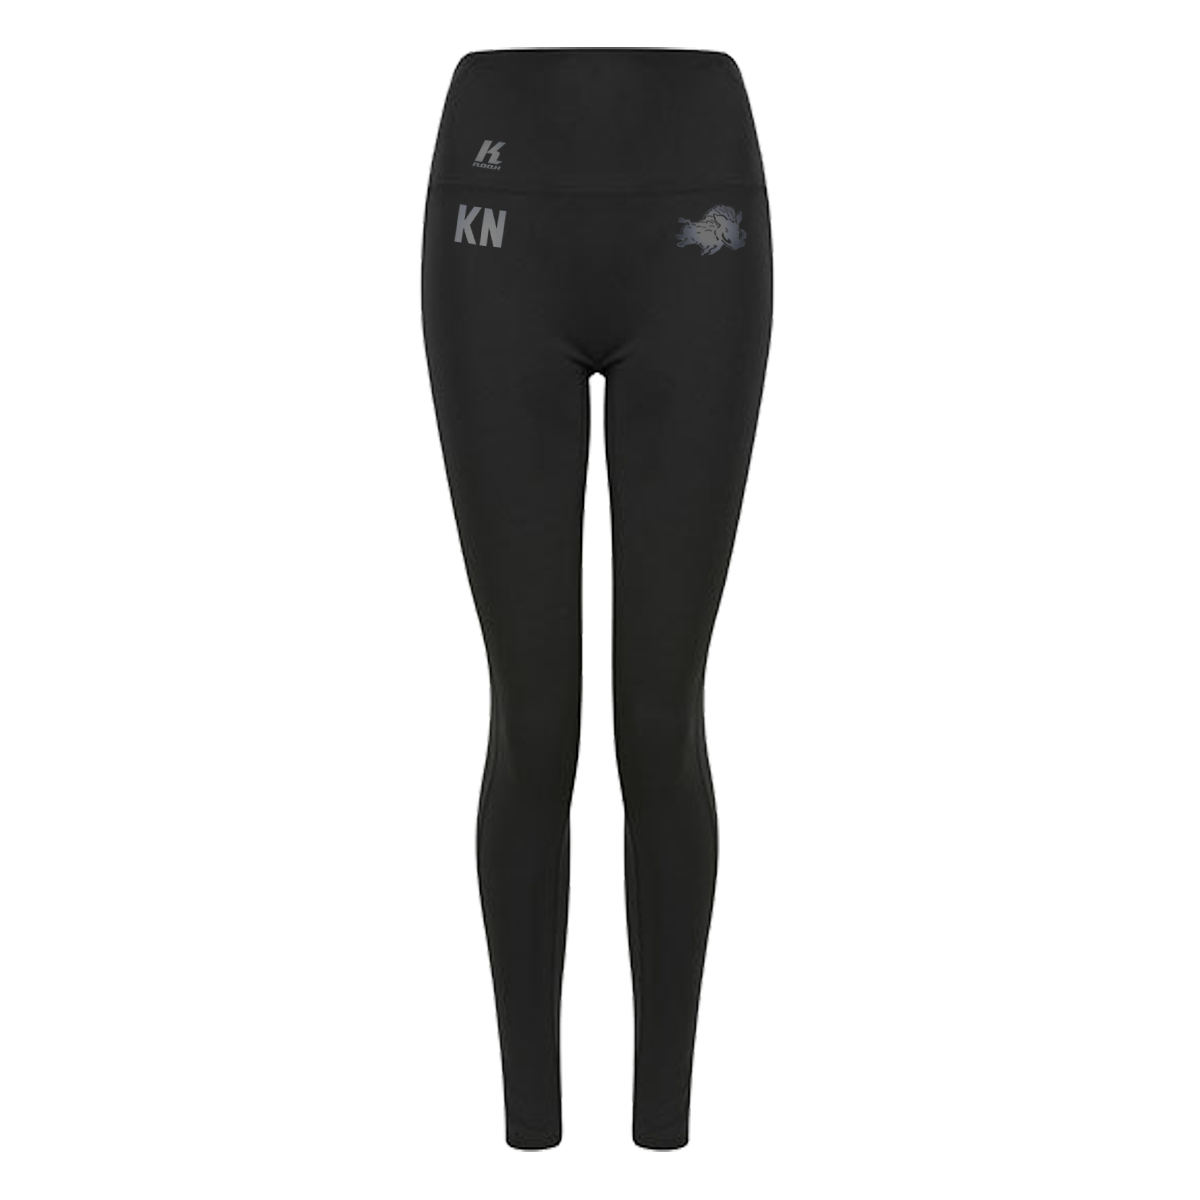 Razorbacks "Blackline" Womens Core Pocket Legging TL370 with Initials/Playernumber